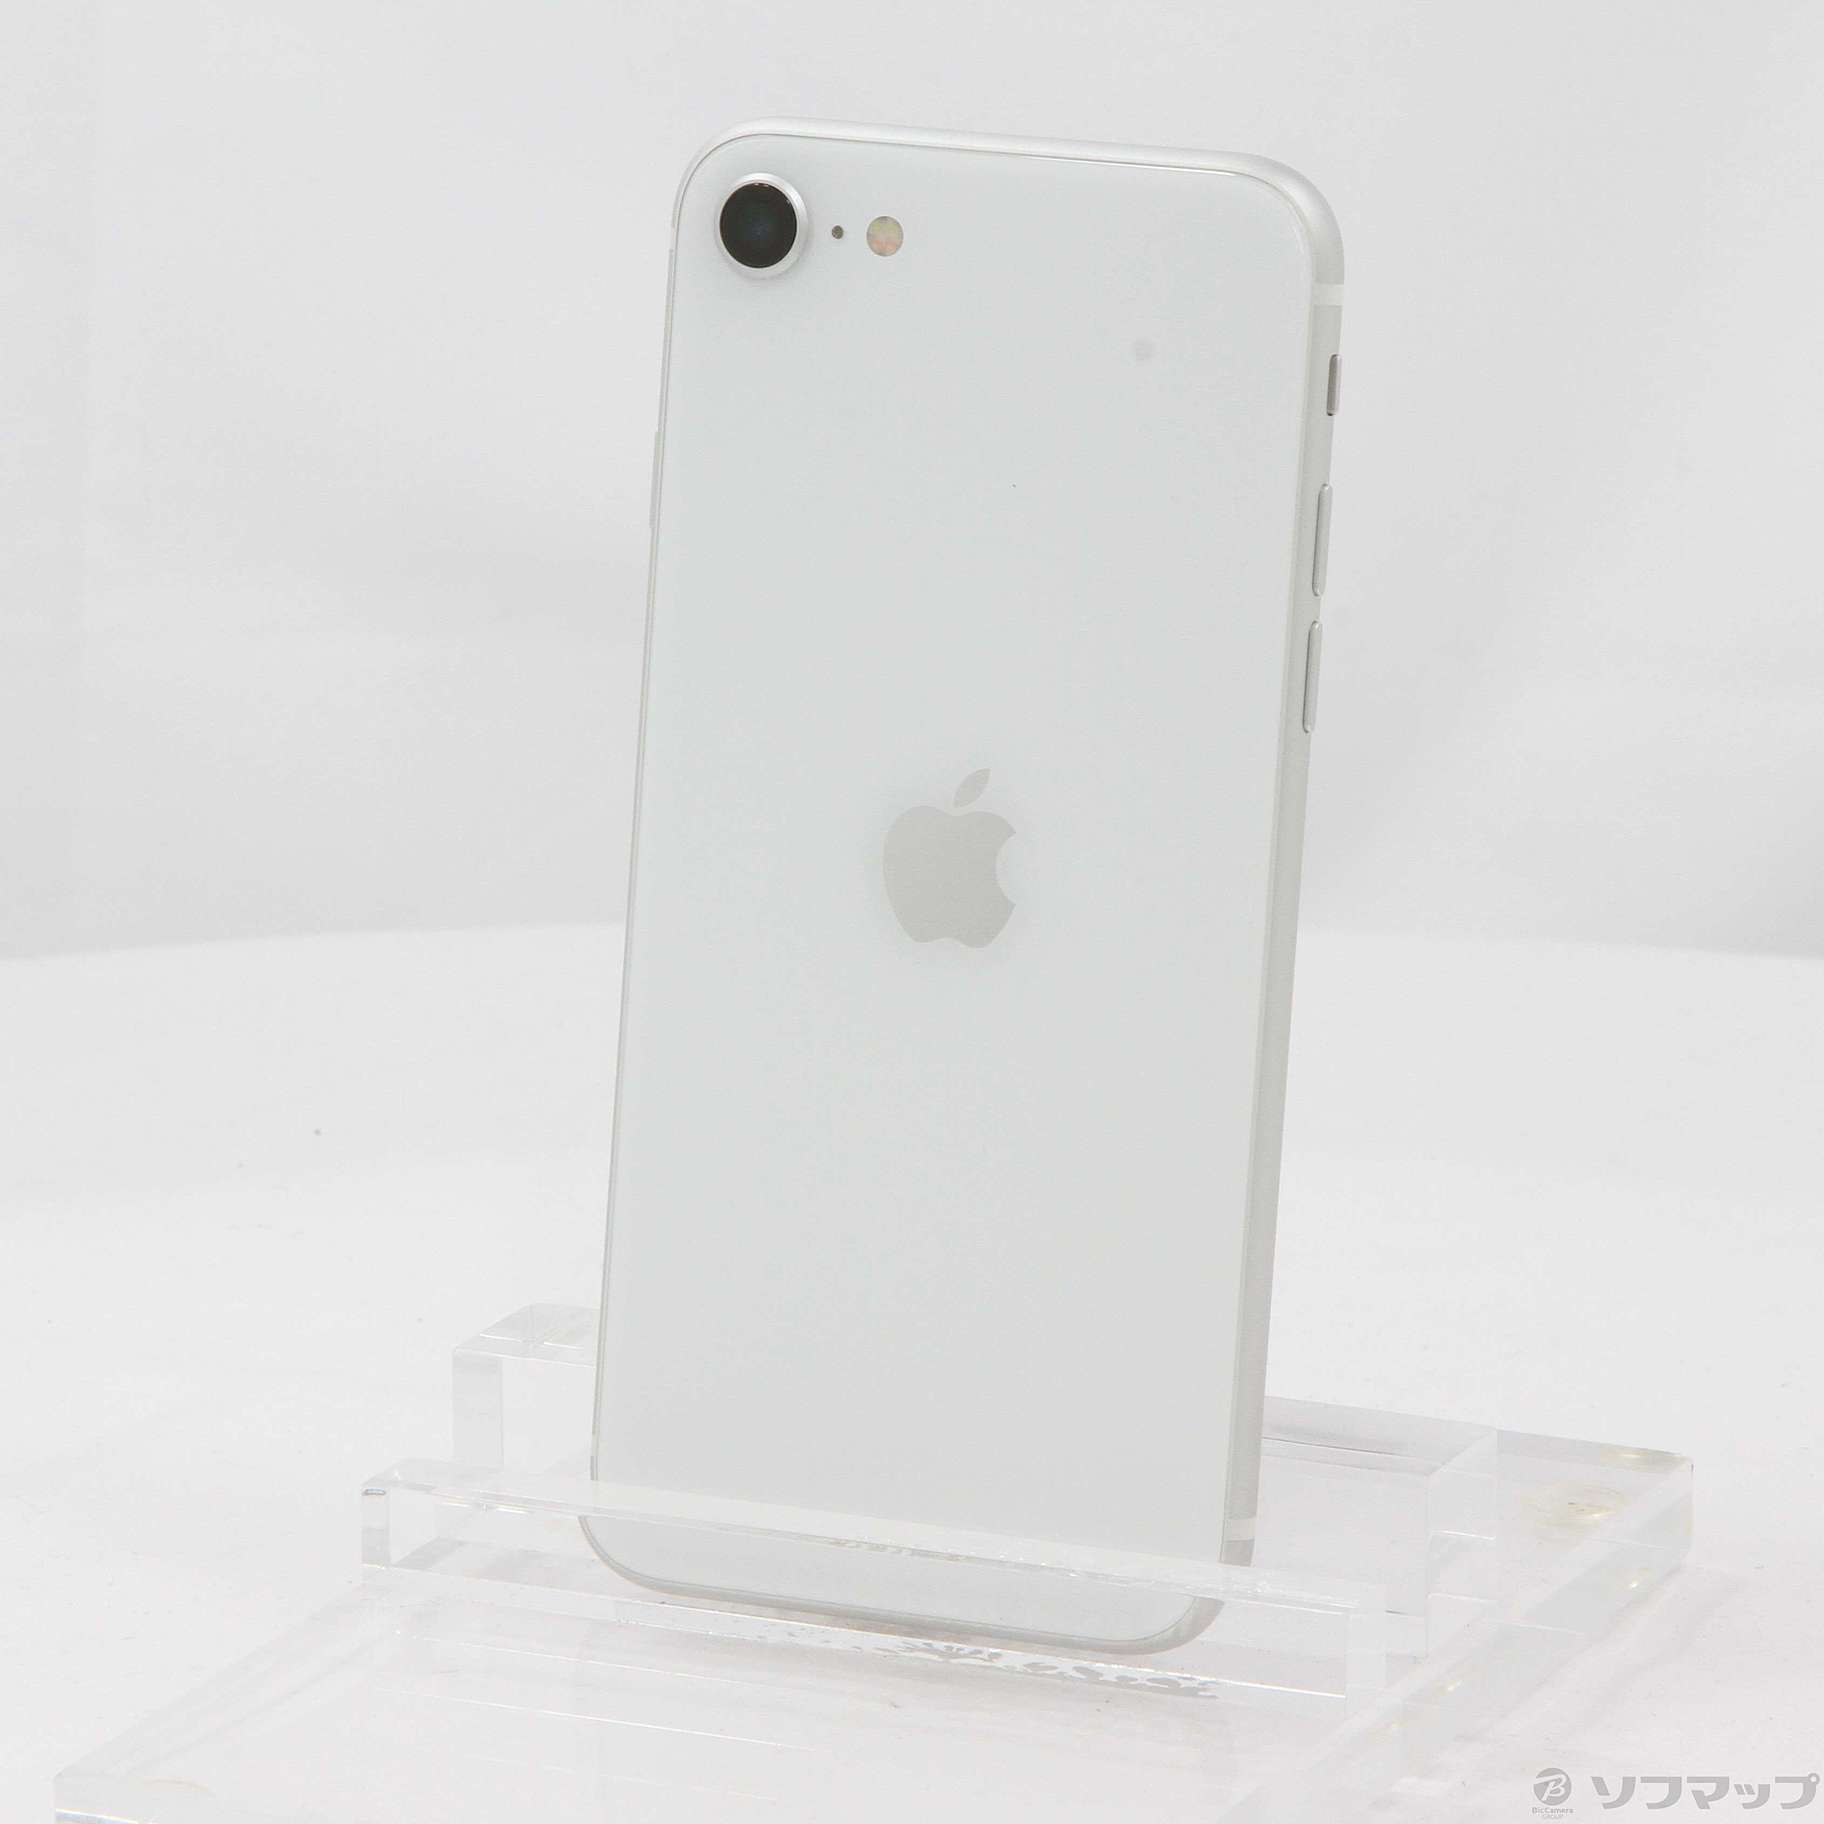 iPhone SE 第2世代 white 256GB SIMフリー 新品 - rehda.com